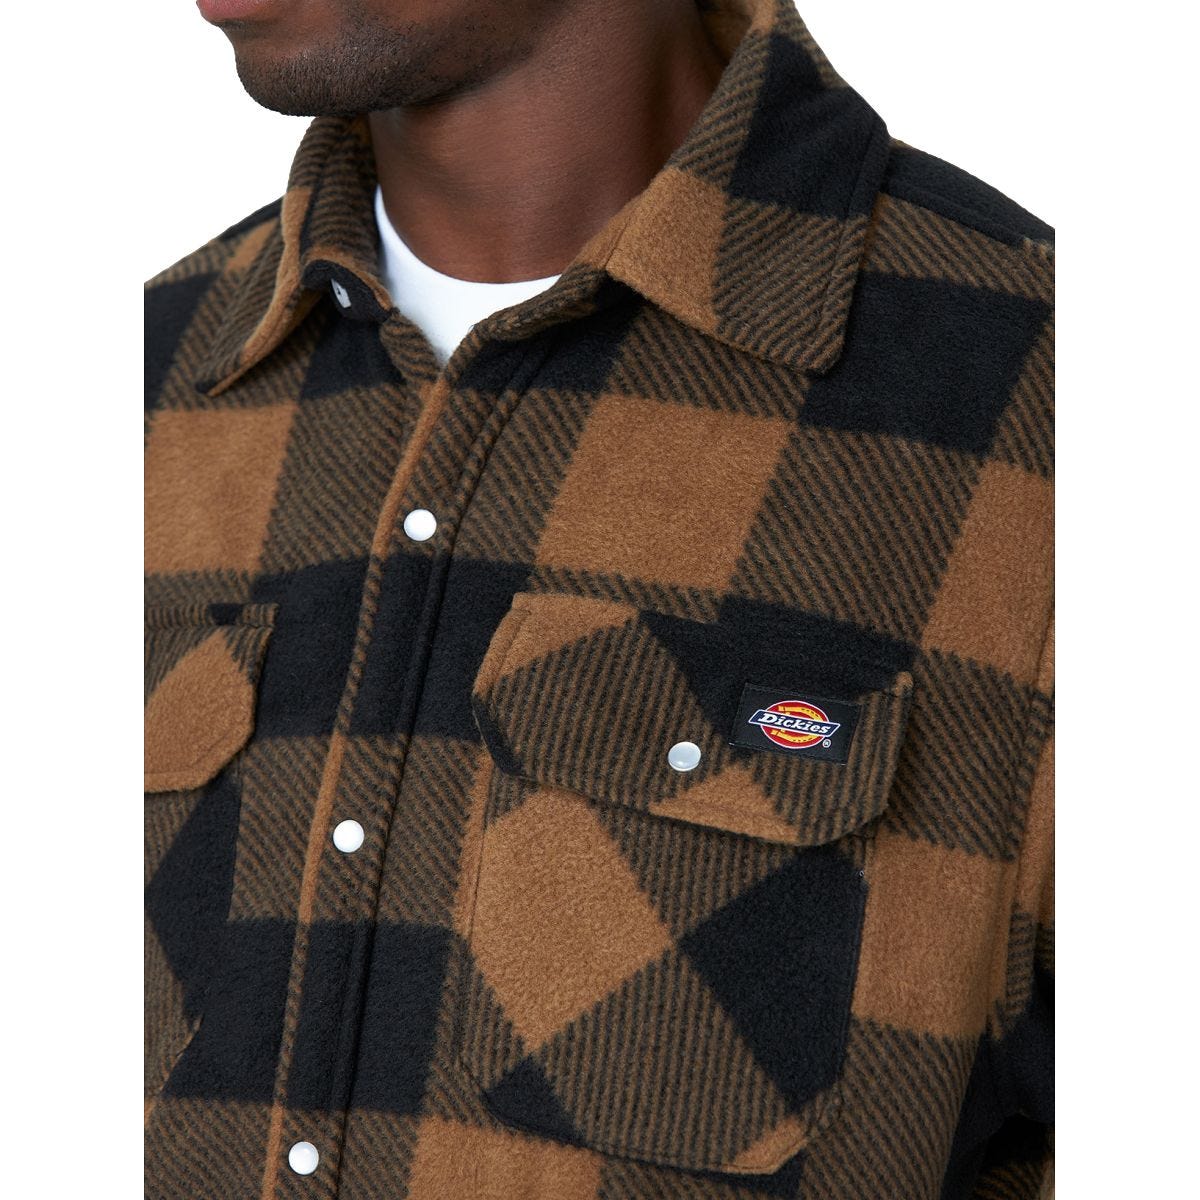 Chemise à carreaux Portland Kaki - Dickies - Taille XL 4